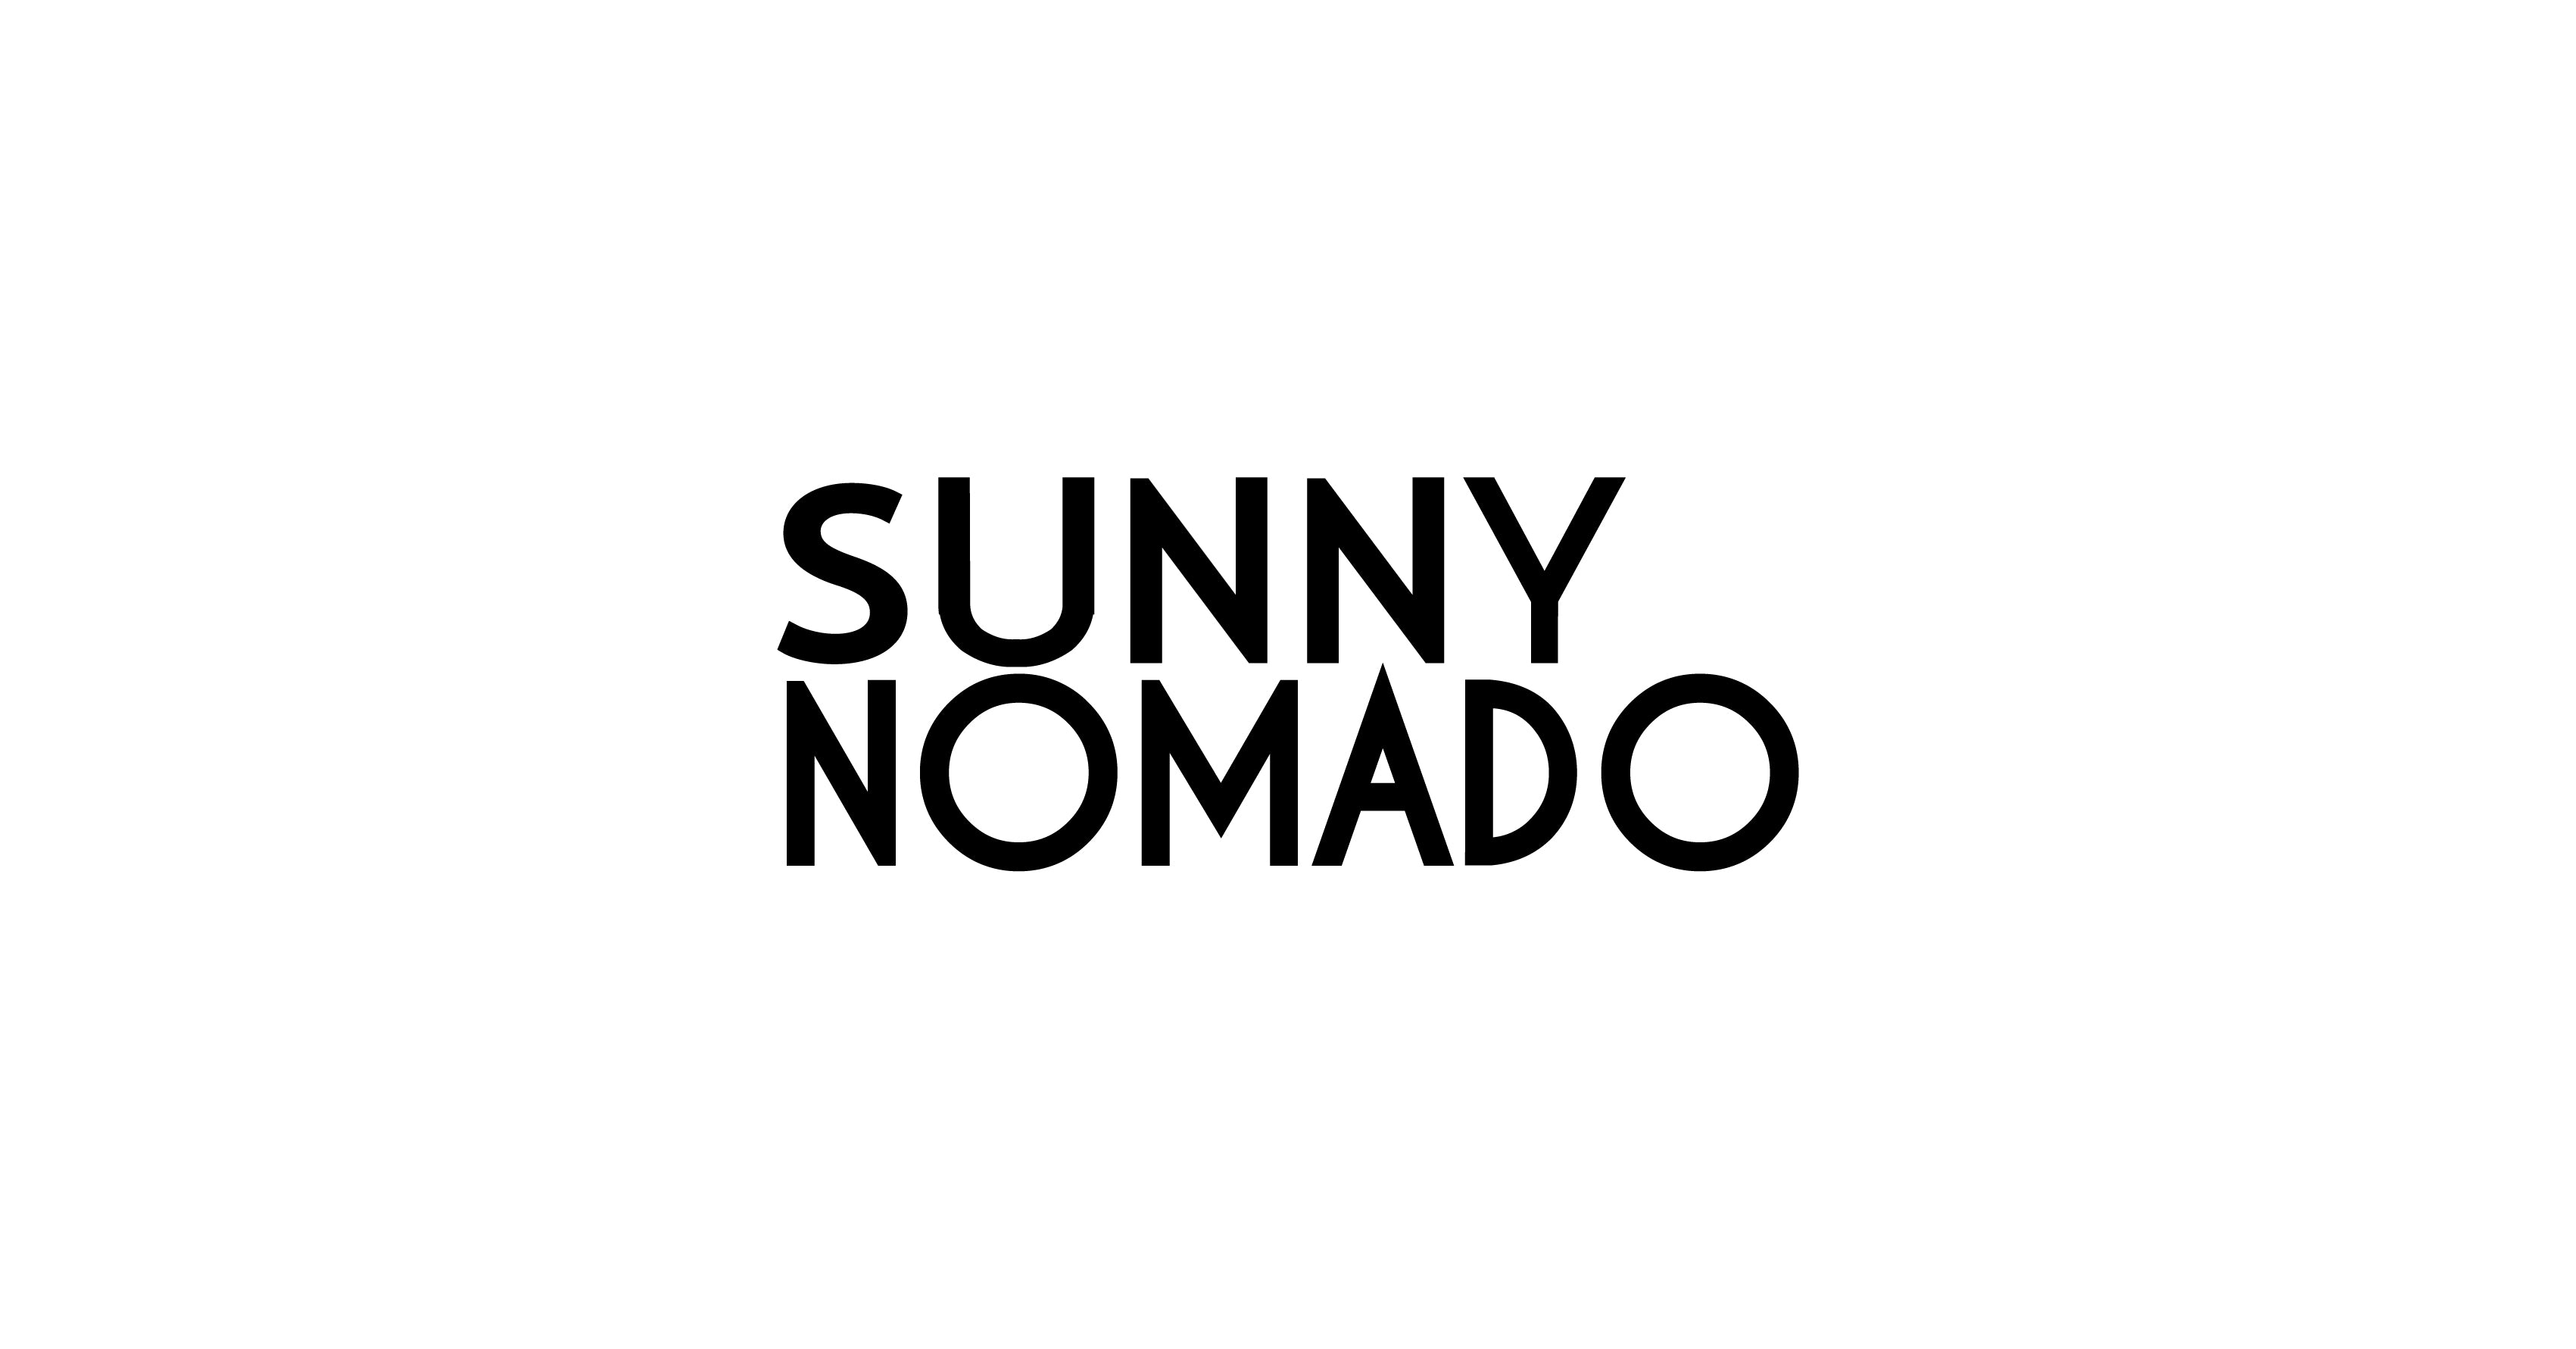 SUNNY NOMADO